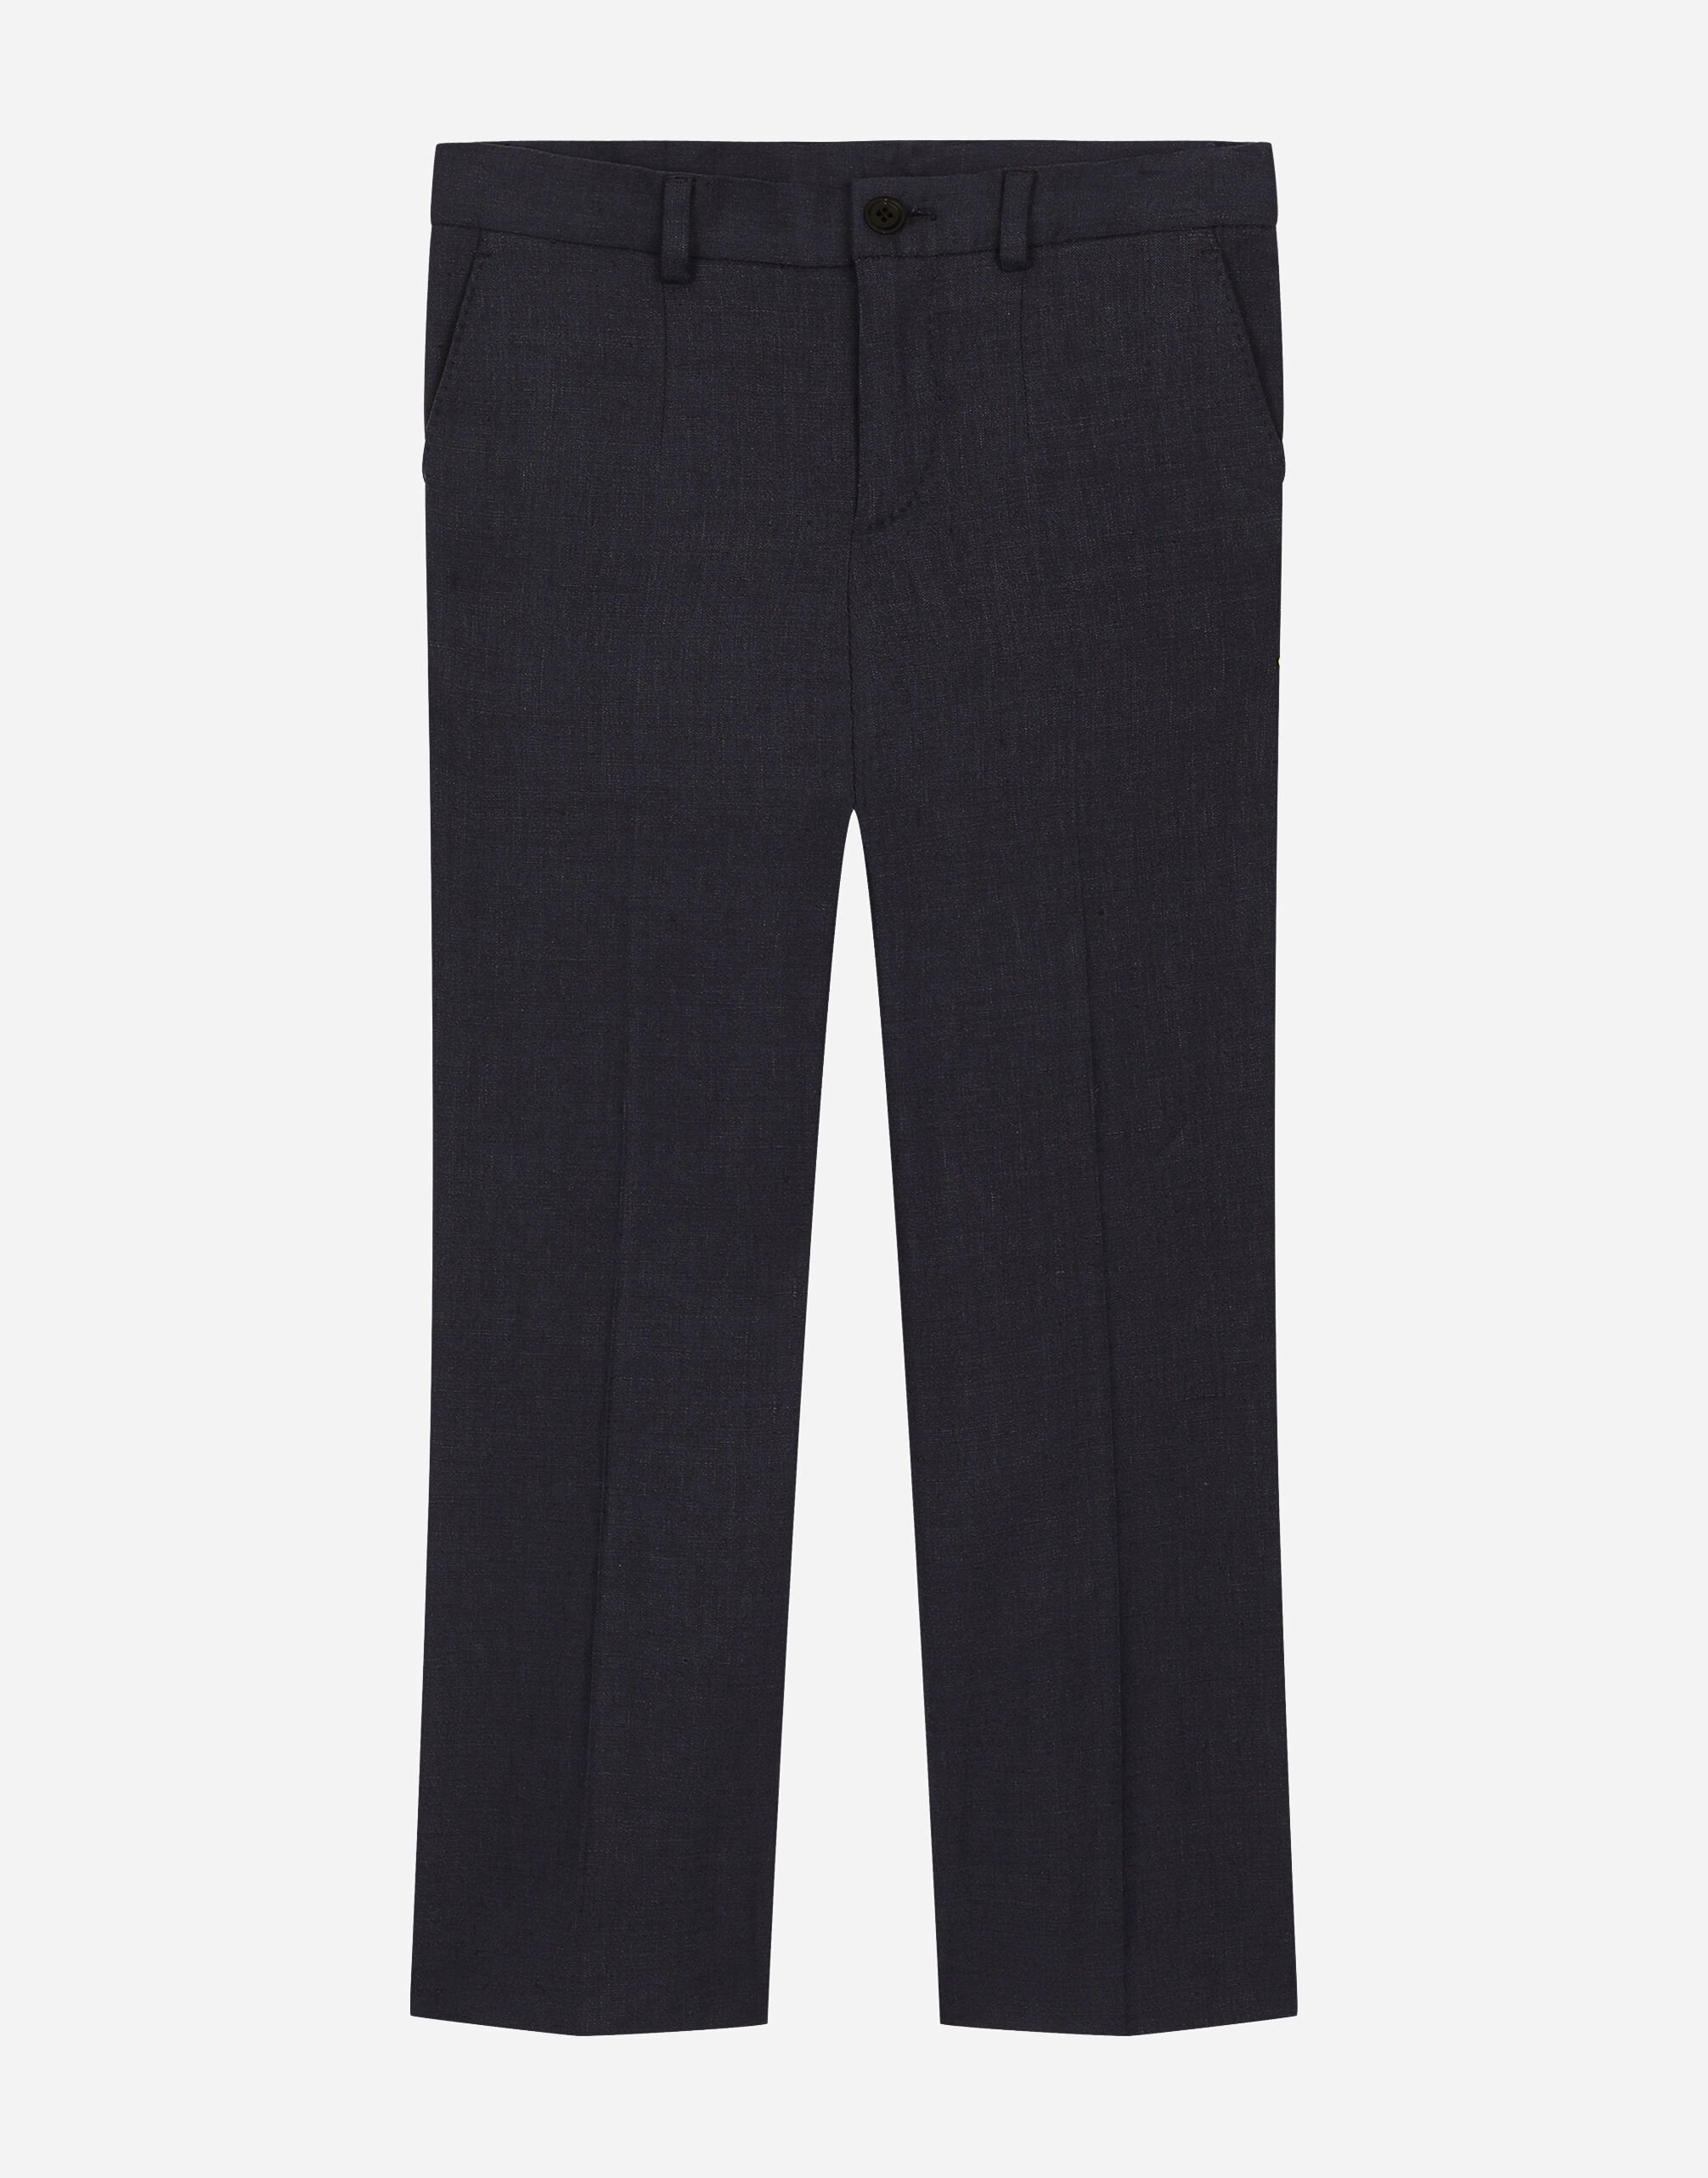 Dolce & Gabbana Classic linen fabric pants Print L43Q25G7L7S